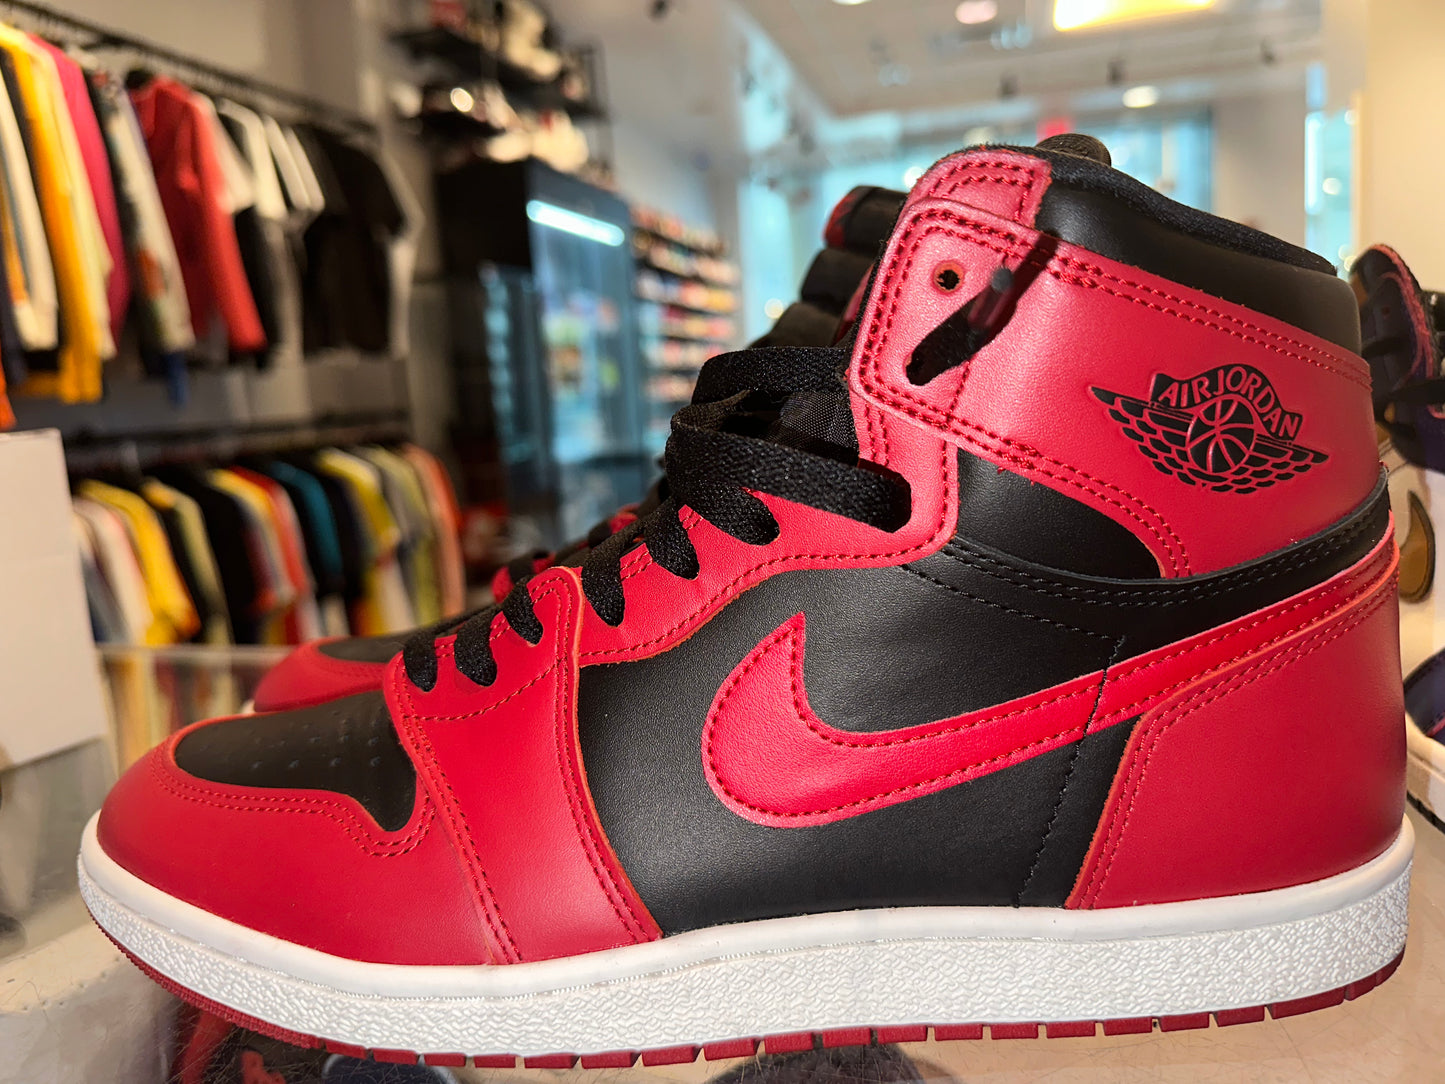 Size 11.5 Air Jordan 1 ‘85 “Varsity Red” Worn 1x (Mall)